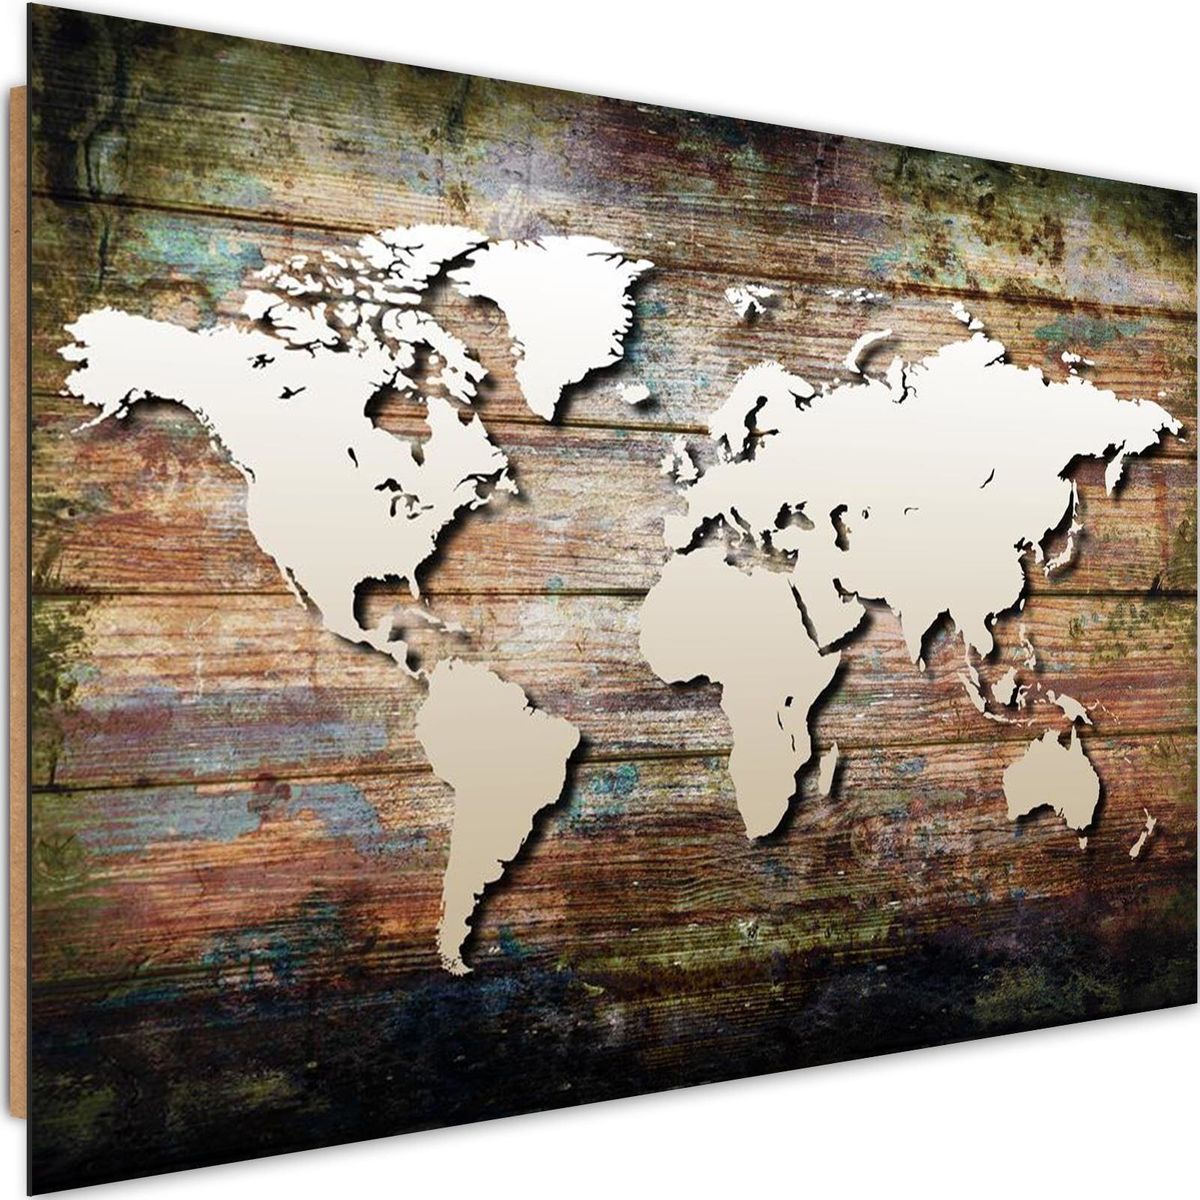 Tableau carte du monde, tableau mappemonde, cadre carte du monde, tableau  sur toile carte du monde, tableau planisphère, tableau toile avec  mappemonde, triptyque mappemonde, tableau mappemonde vintage